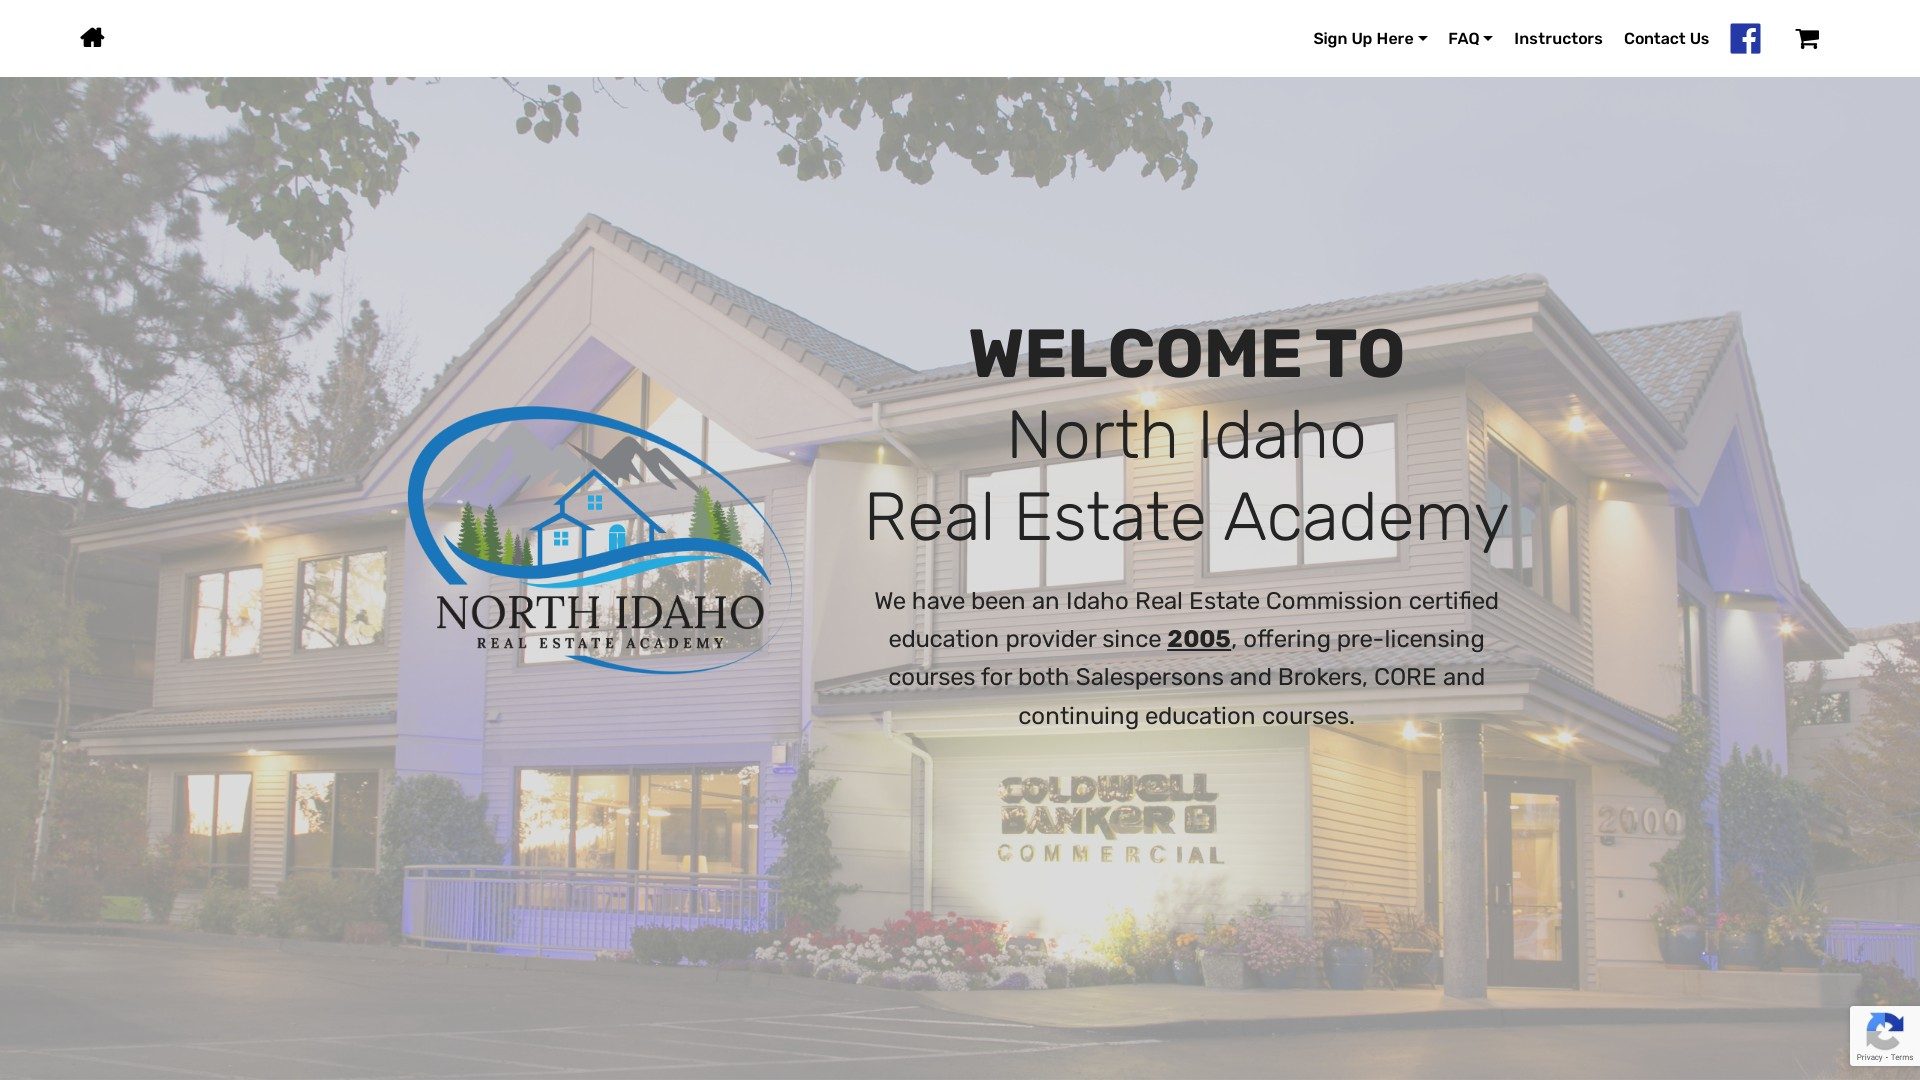 North Idaho Real Estate Academy